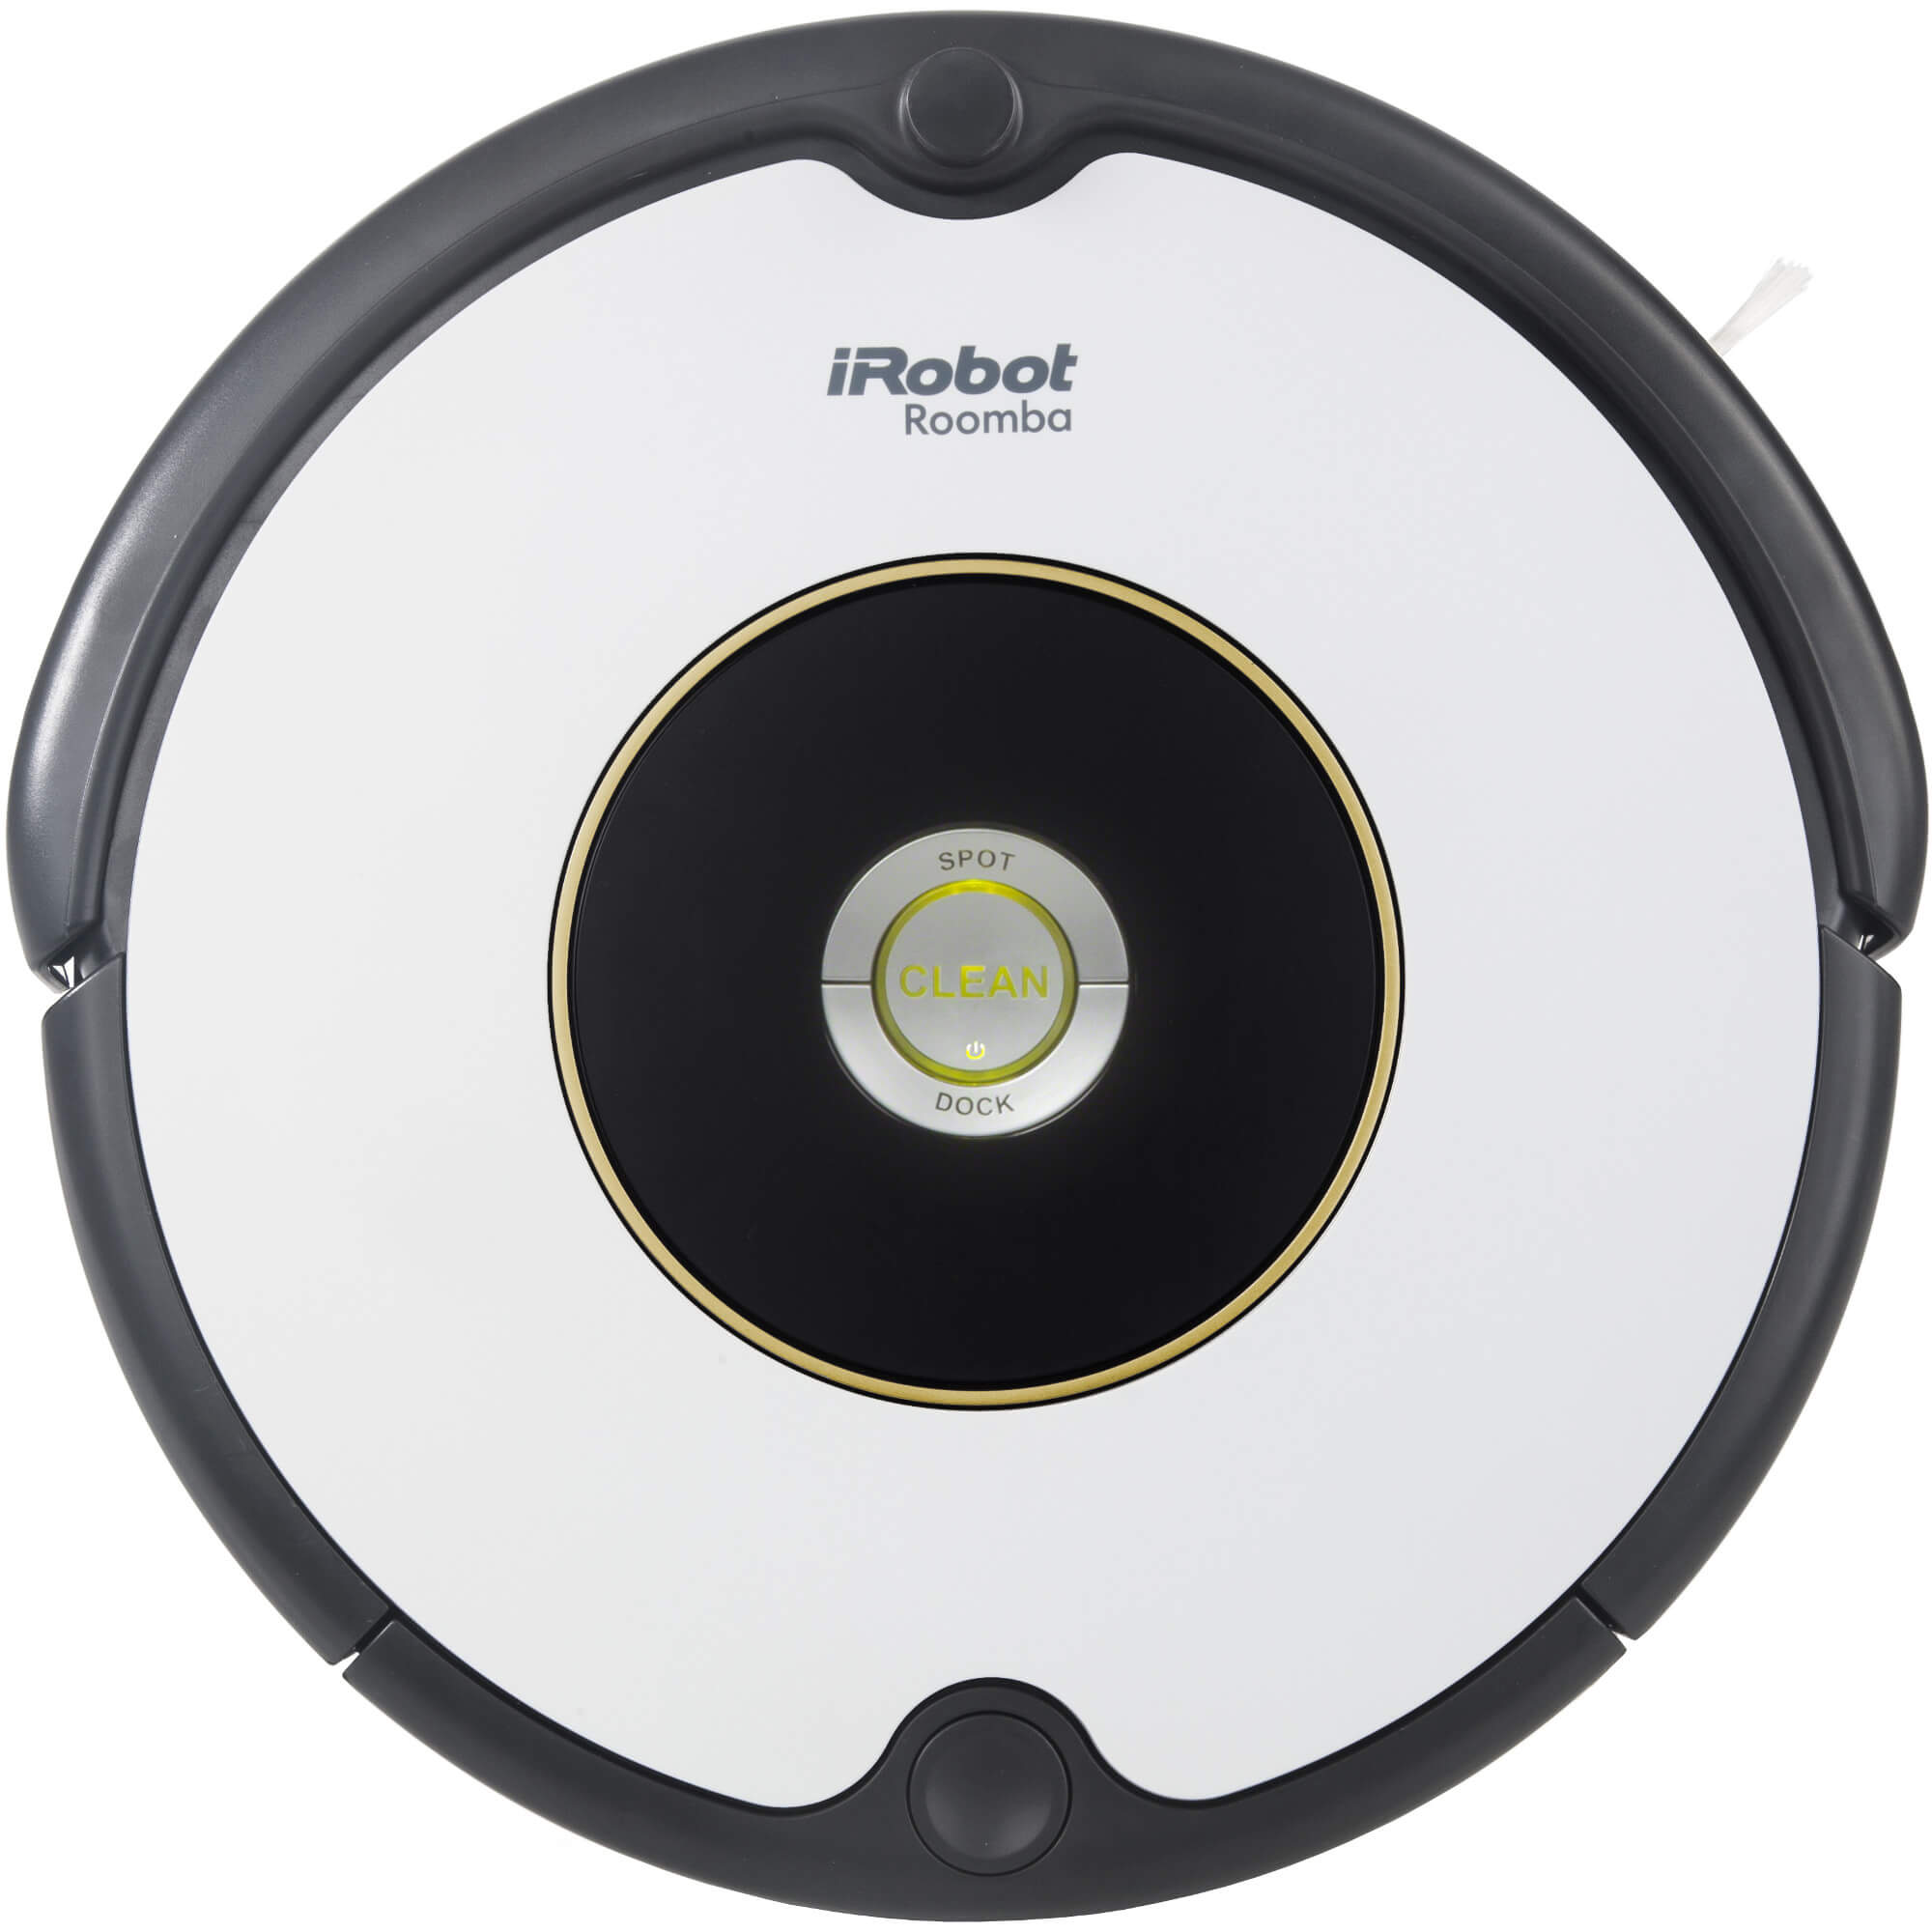  Aspirator robot iRobot Roomba 605, 33 W, 1.32 kWh/an 